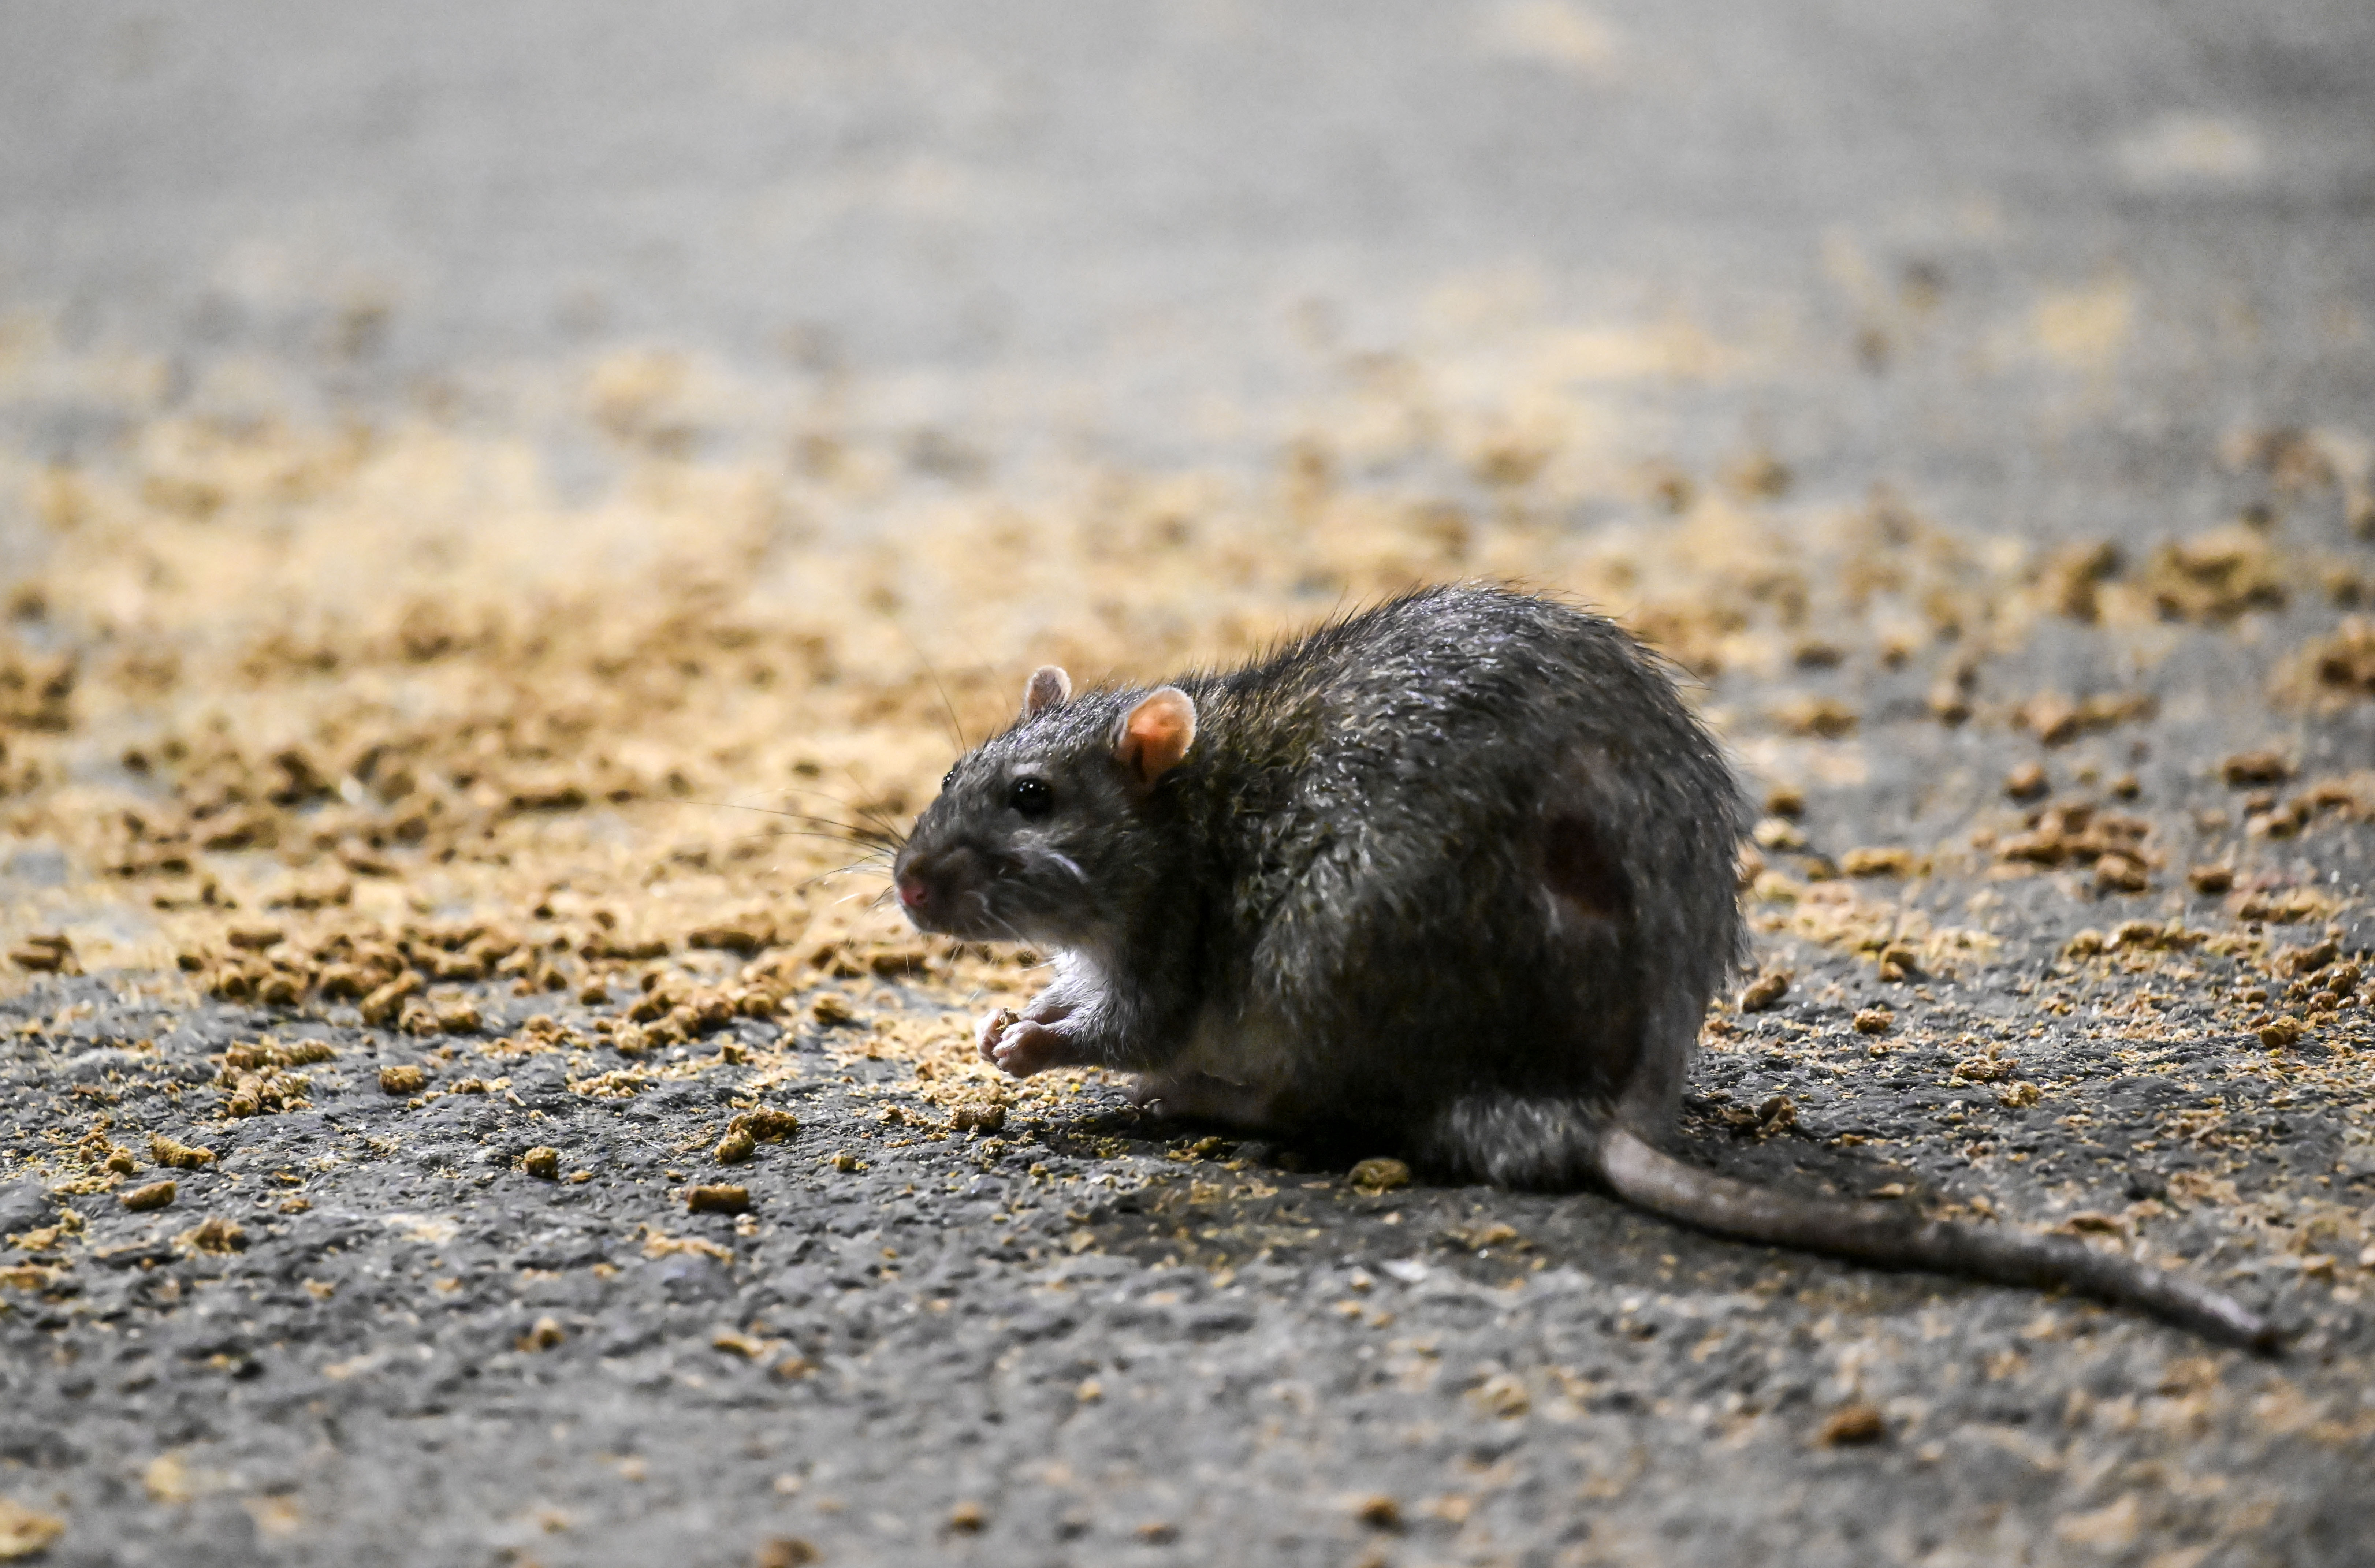 A rat feasting on debris.